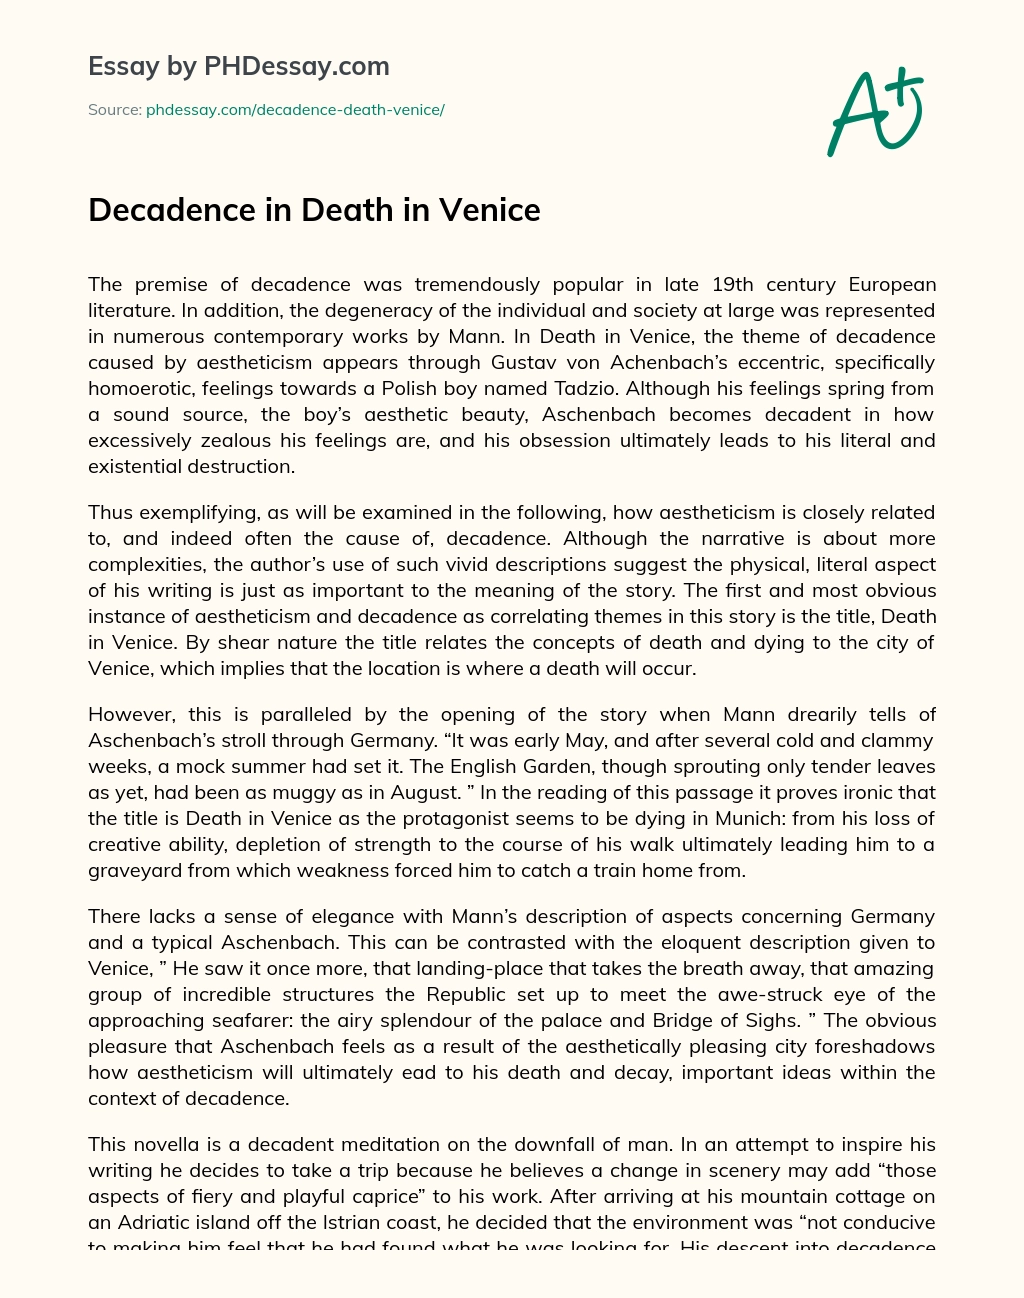 Decadence in Death in Venice essay